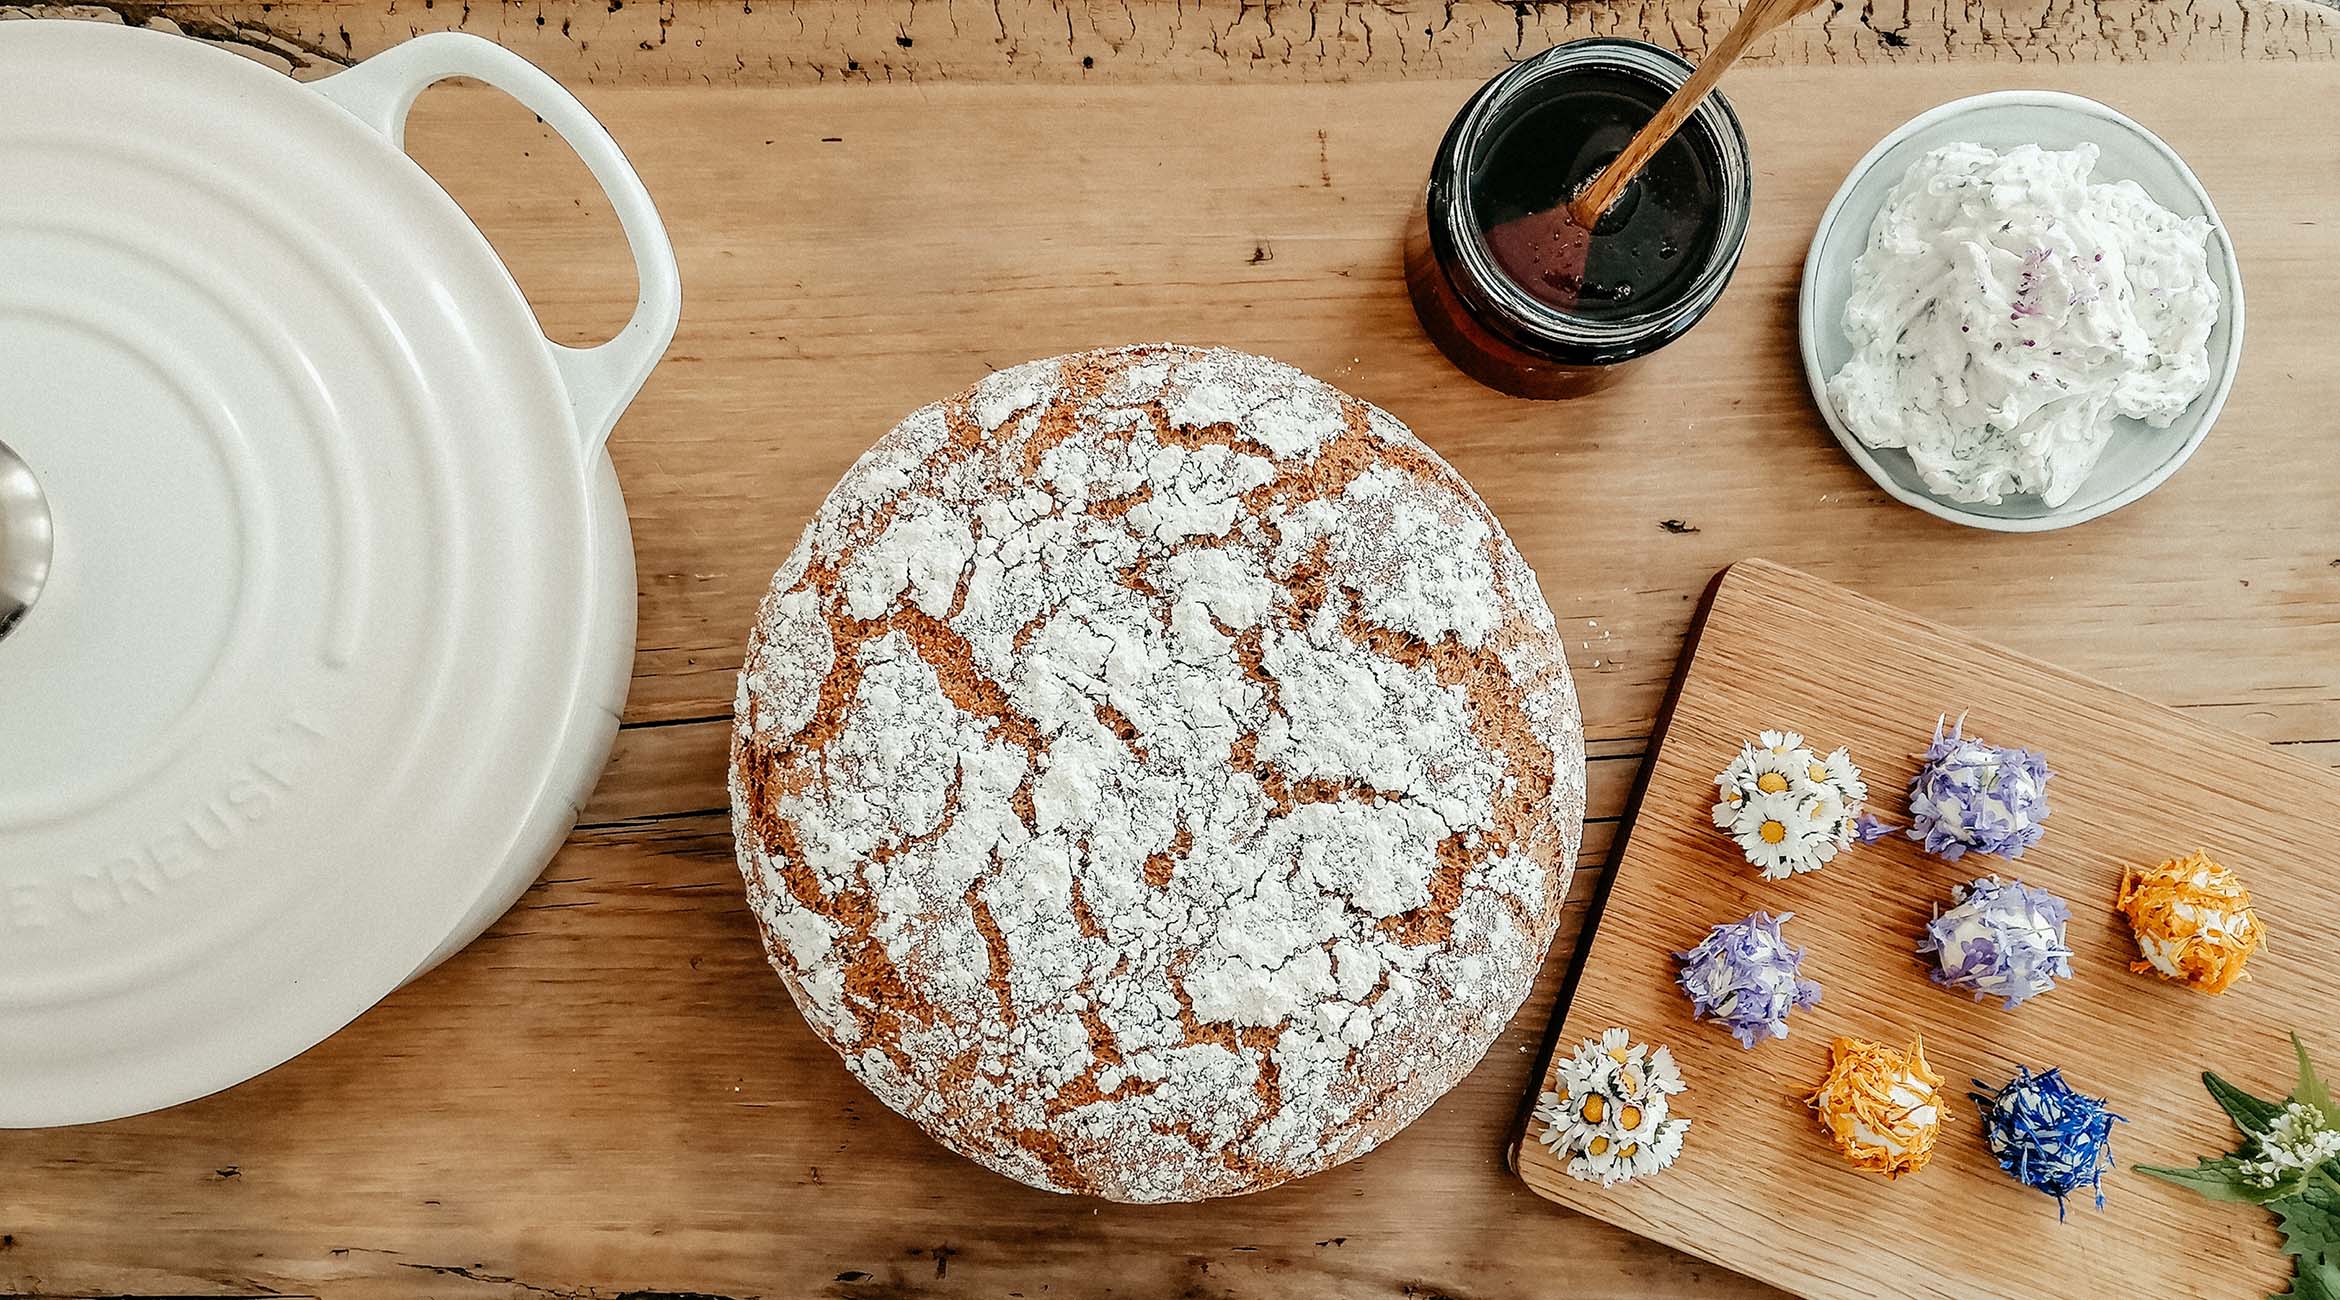 Le Creuset Bräter: Ein Brot-Rezept & 3 Frühlingsaufstriche